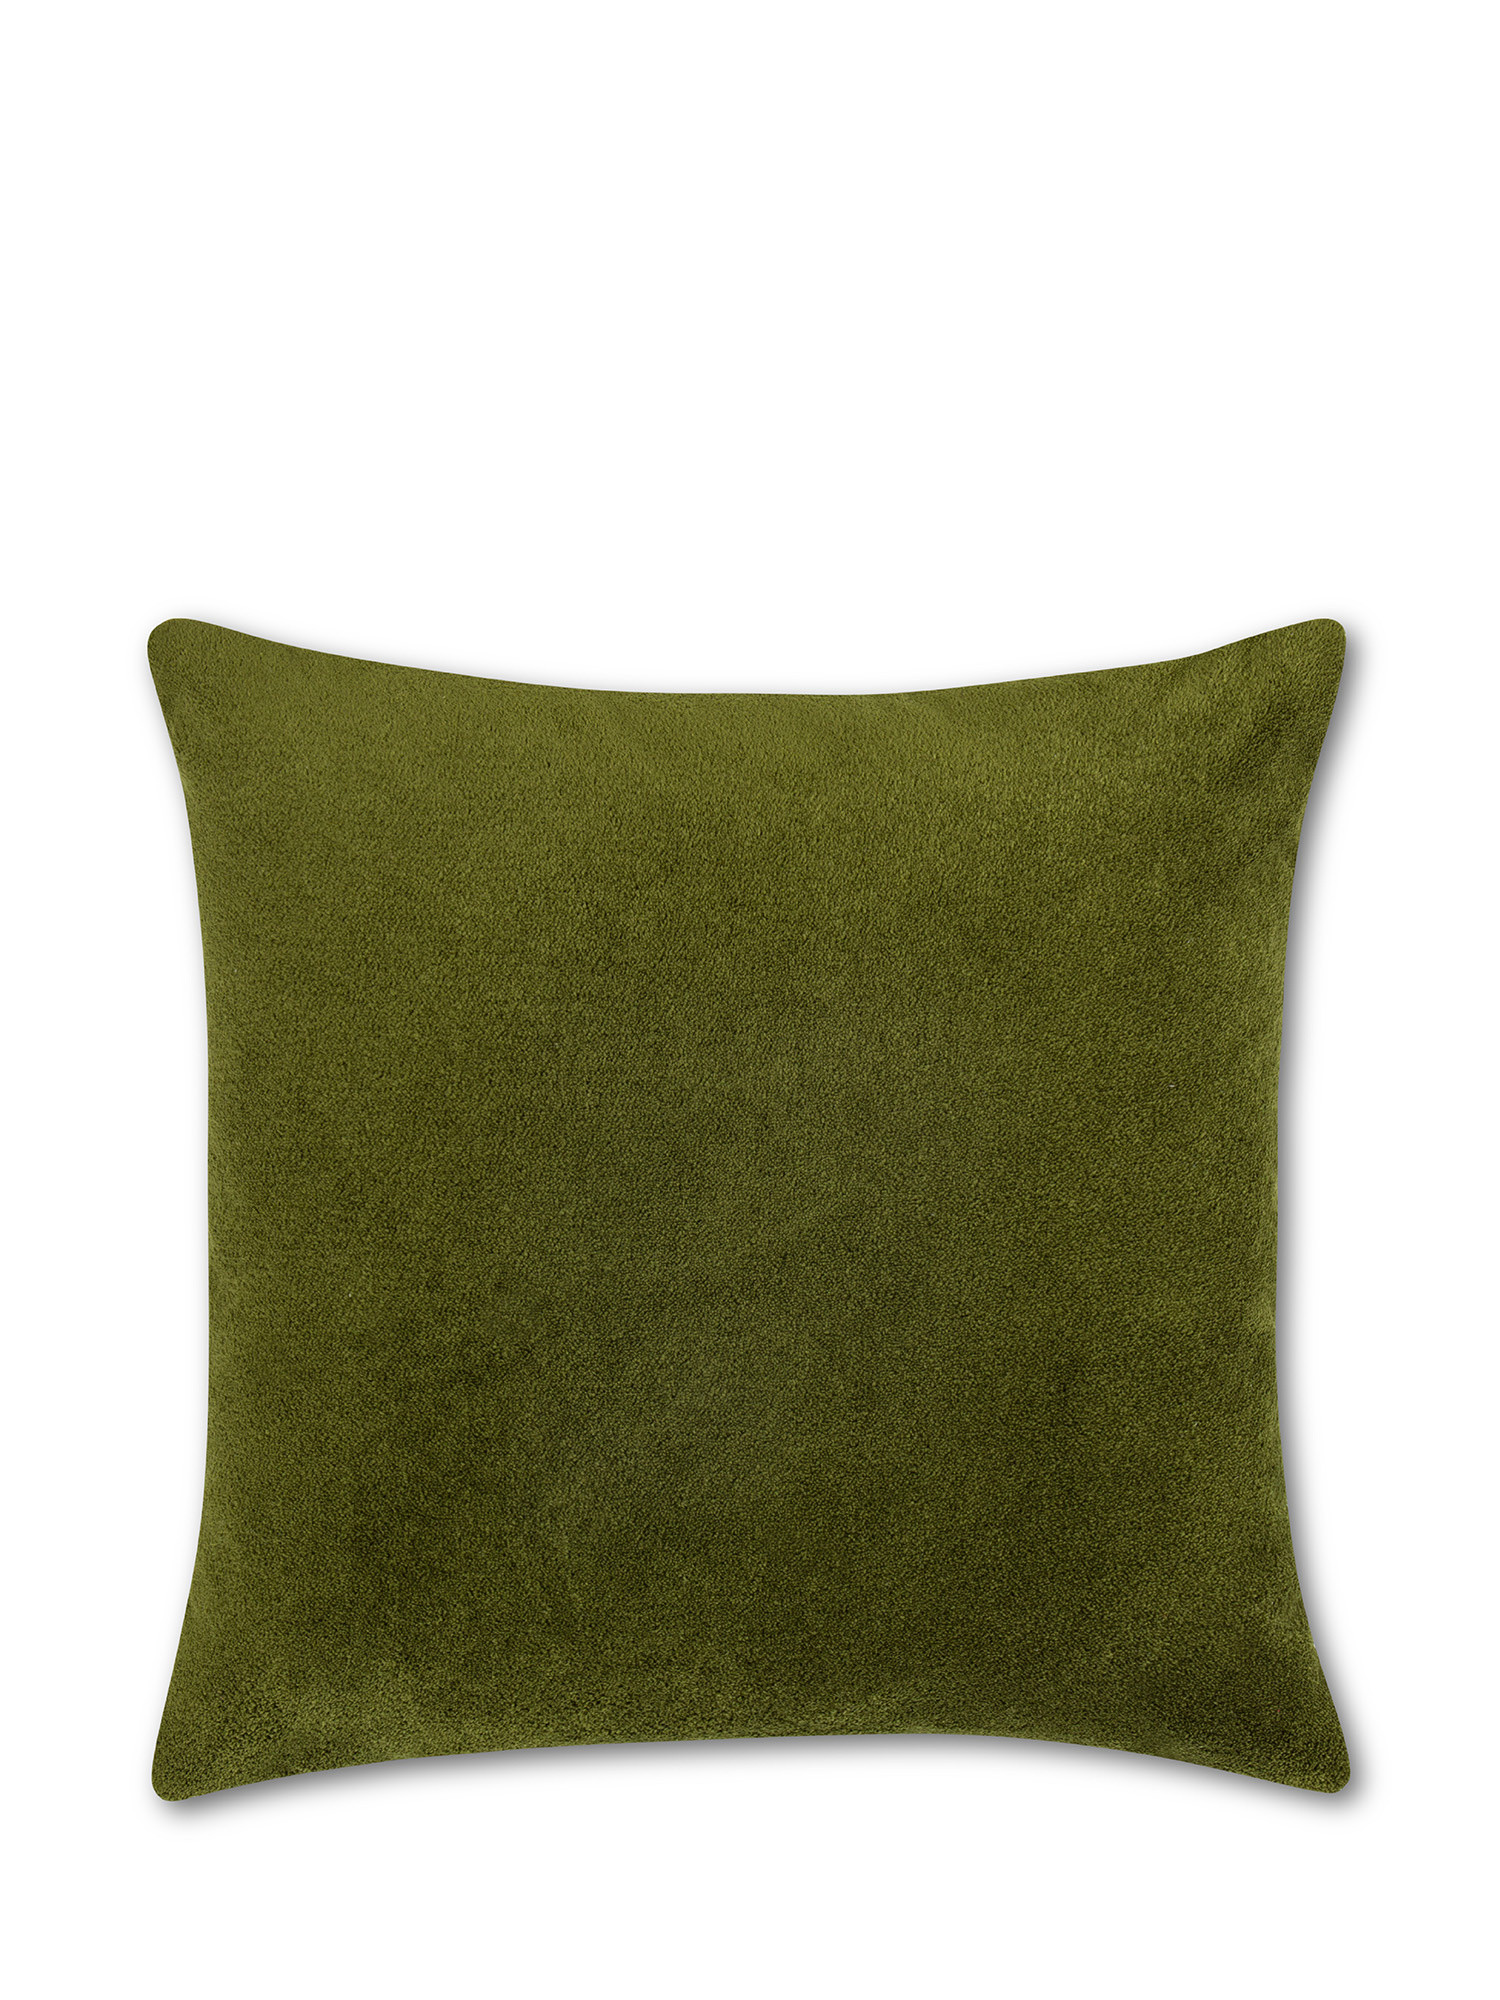 Cuscino tessuto teddy 43x43cm, Verde, large image number 0